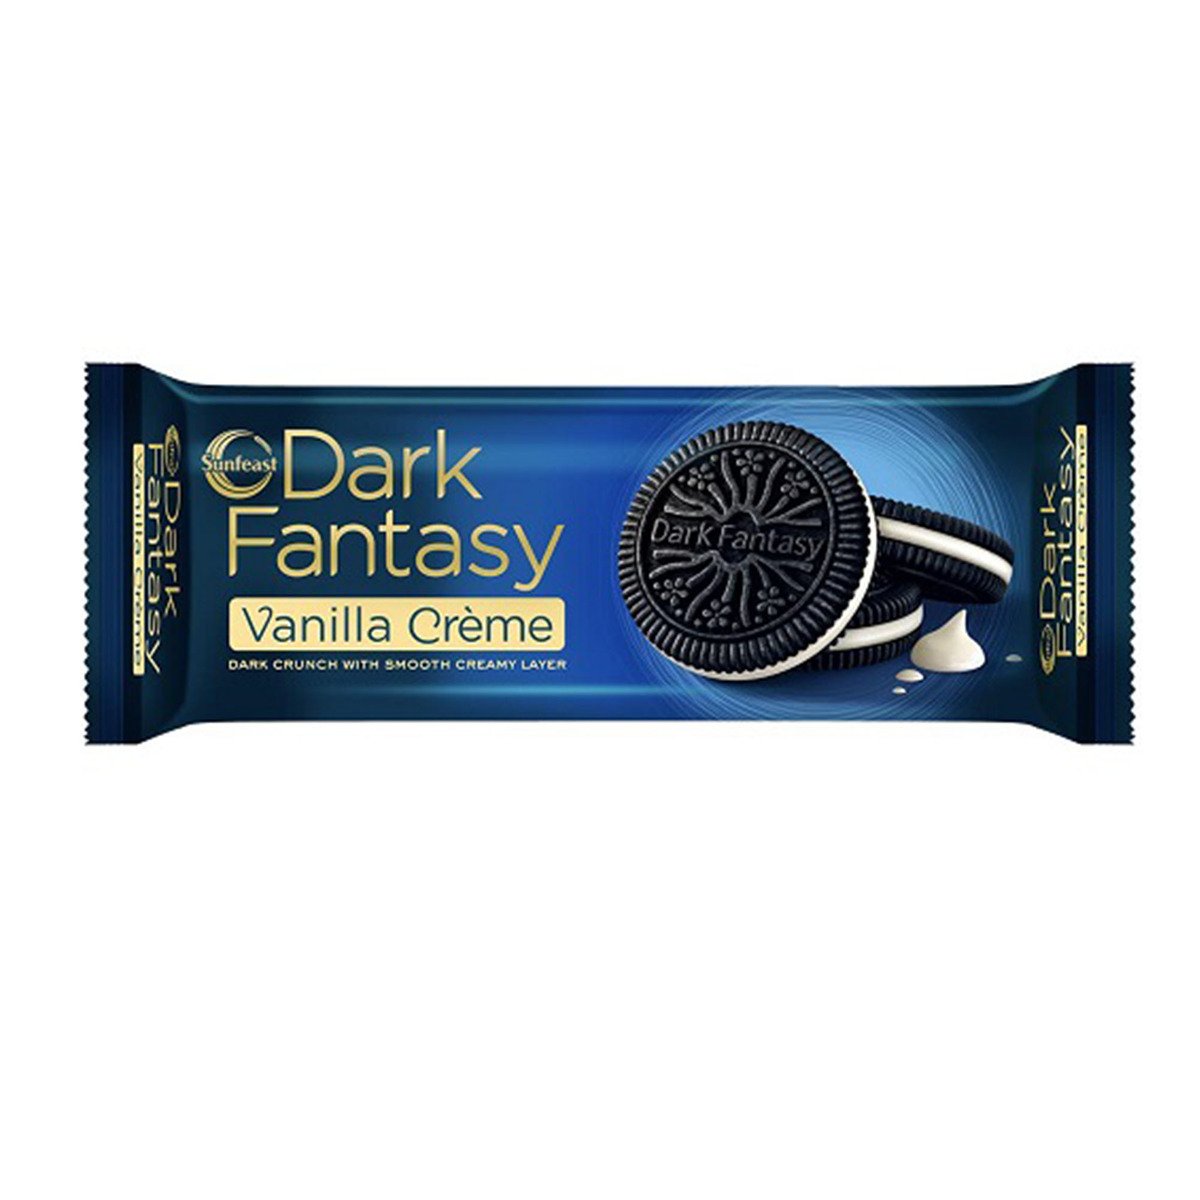 Sunfeast Dark Fantasy Vanilla Creme 75 g